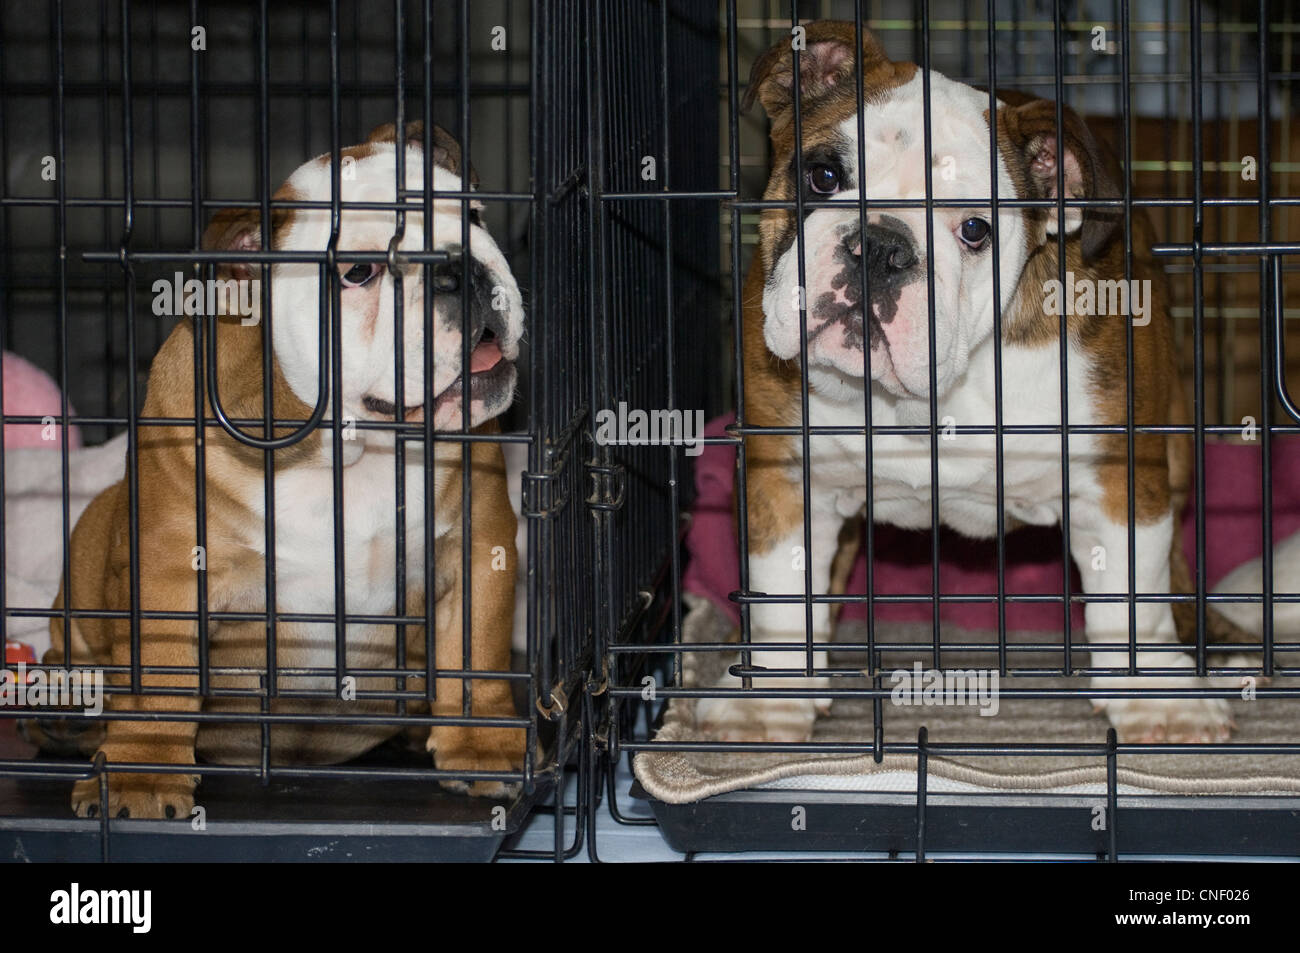 English bulldog puppies in crates Stock Photo - Alamy